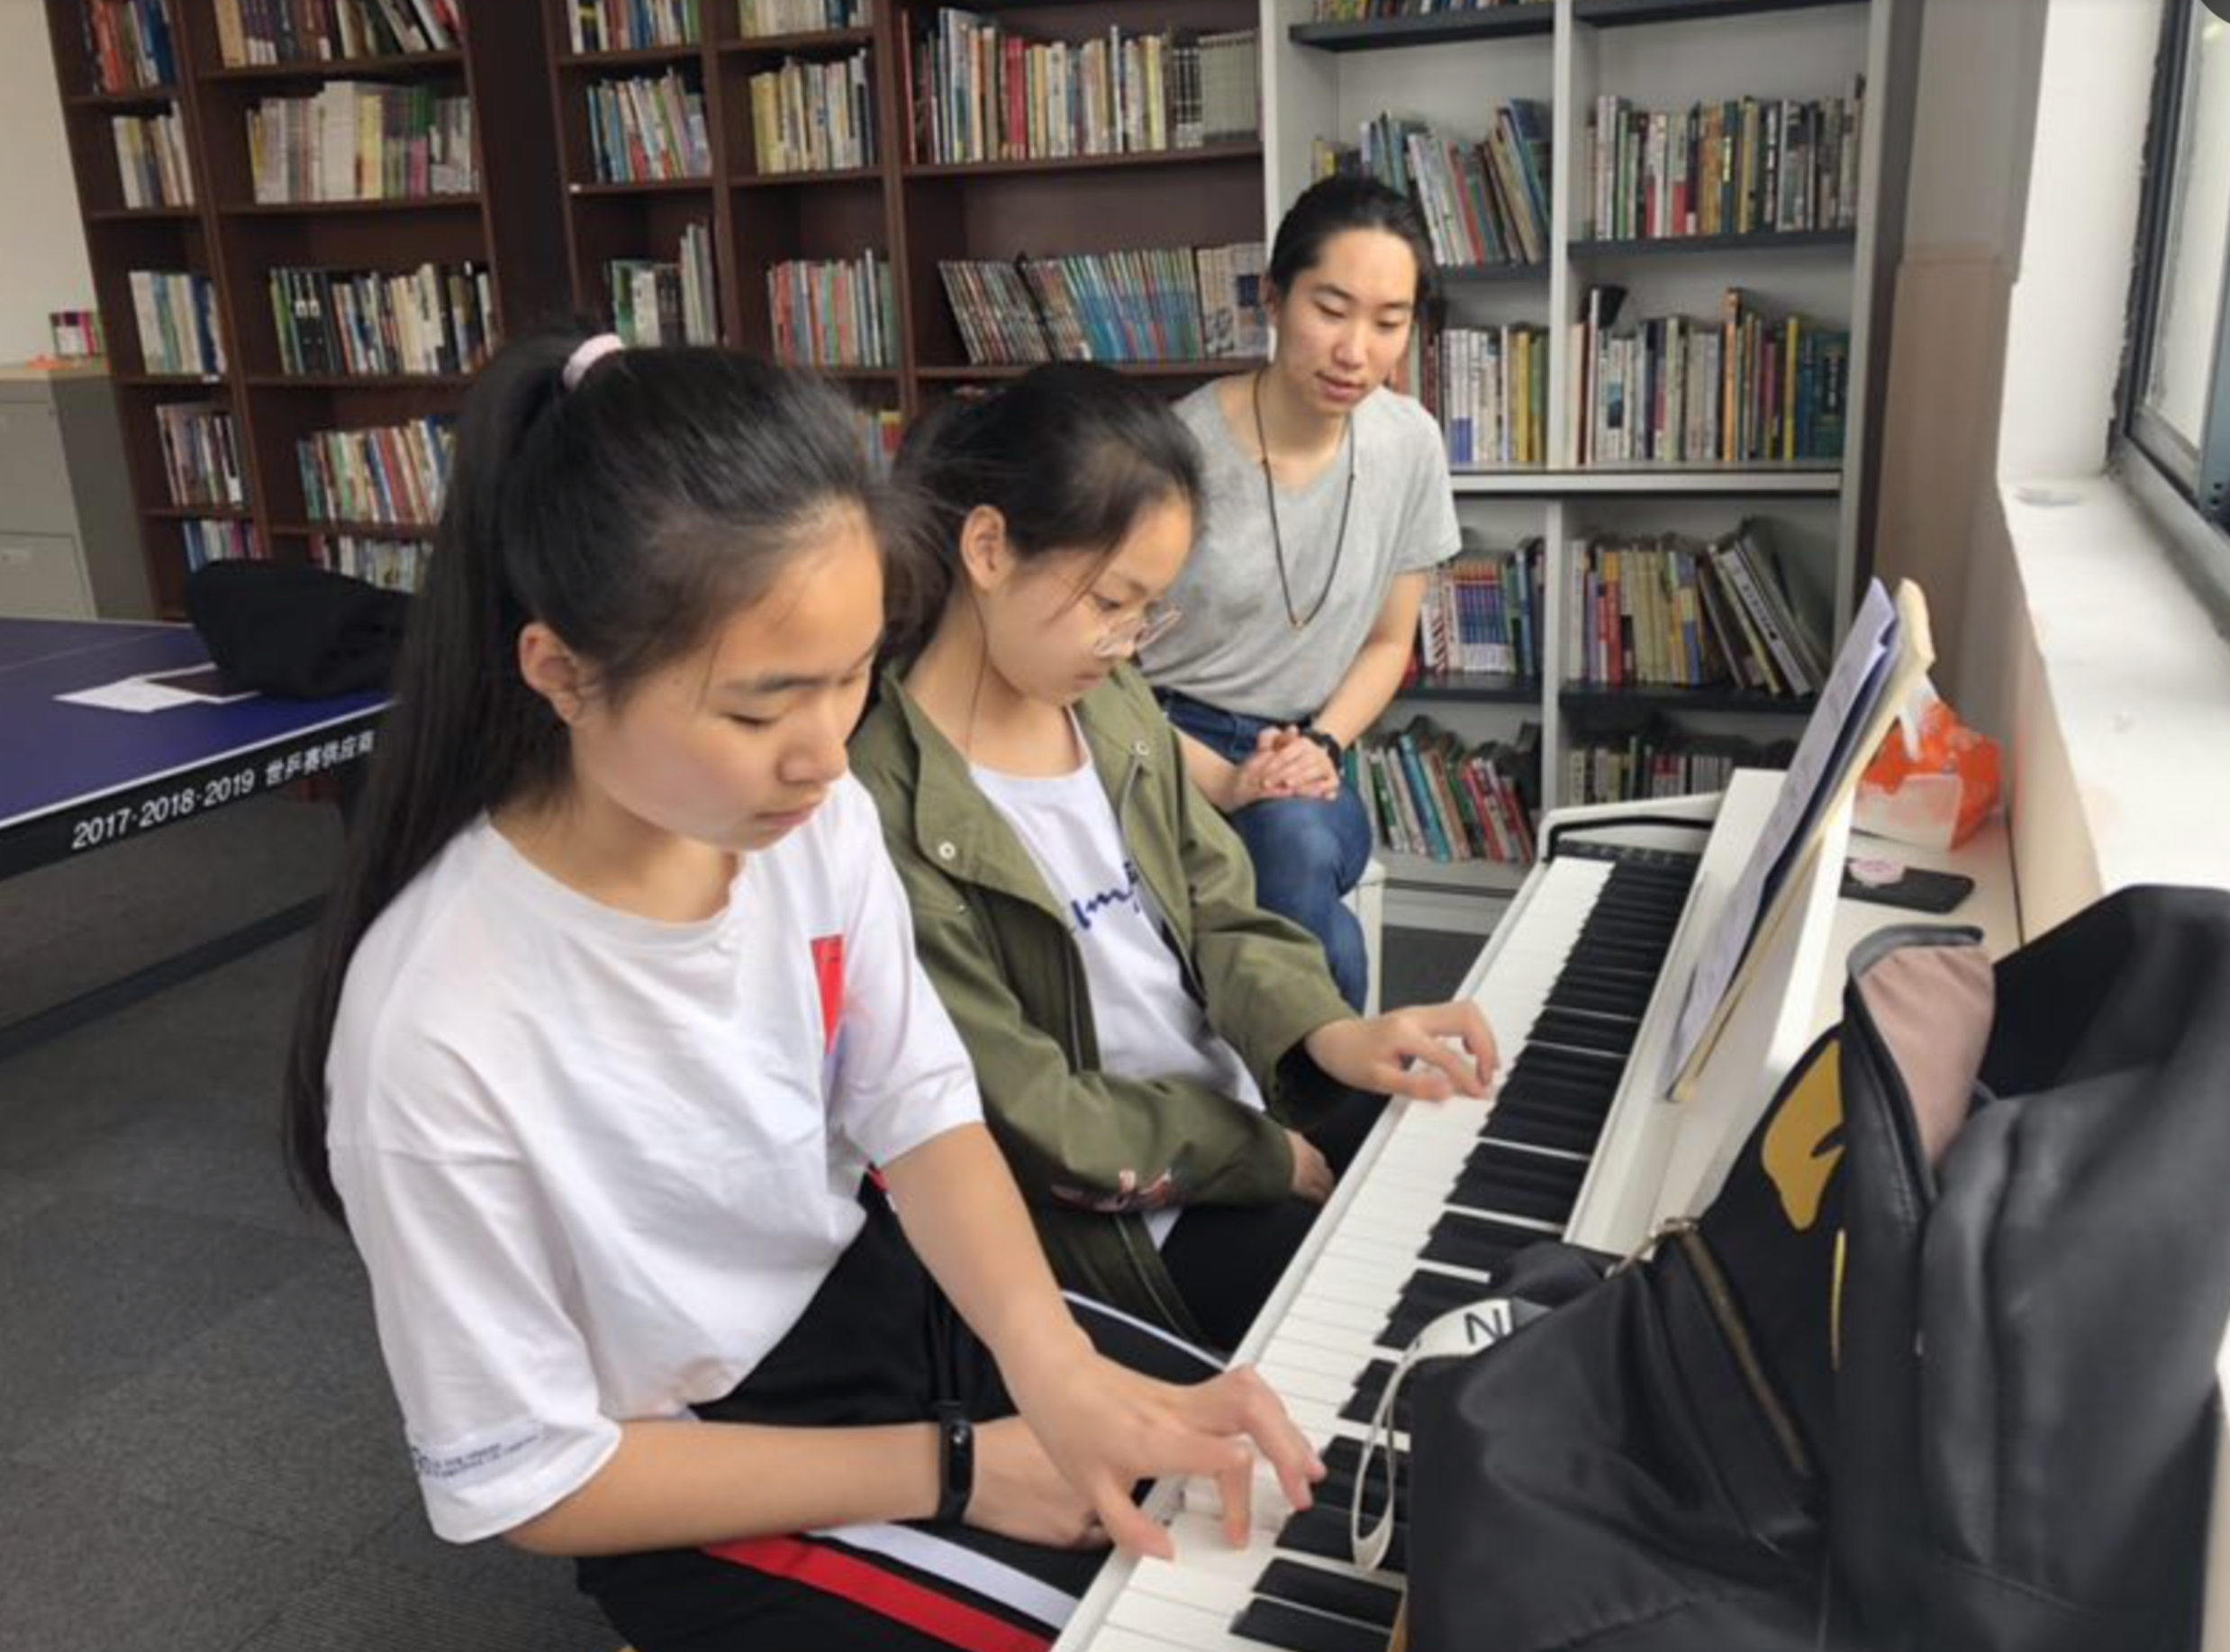 Li teaches piano